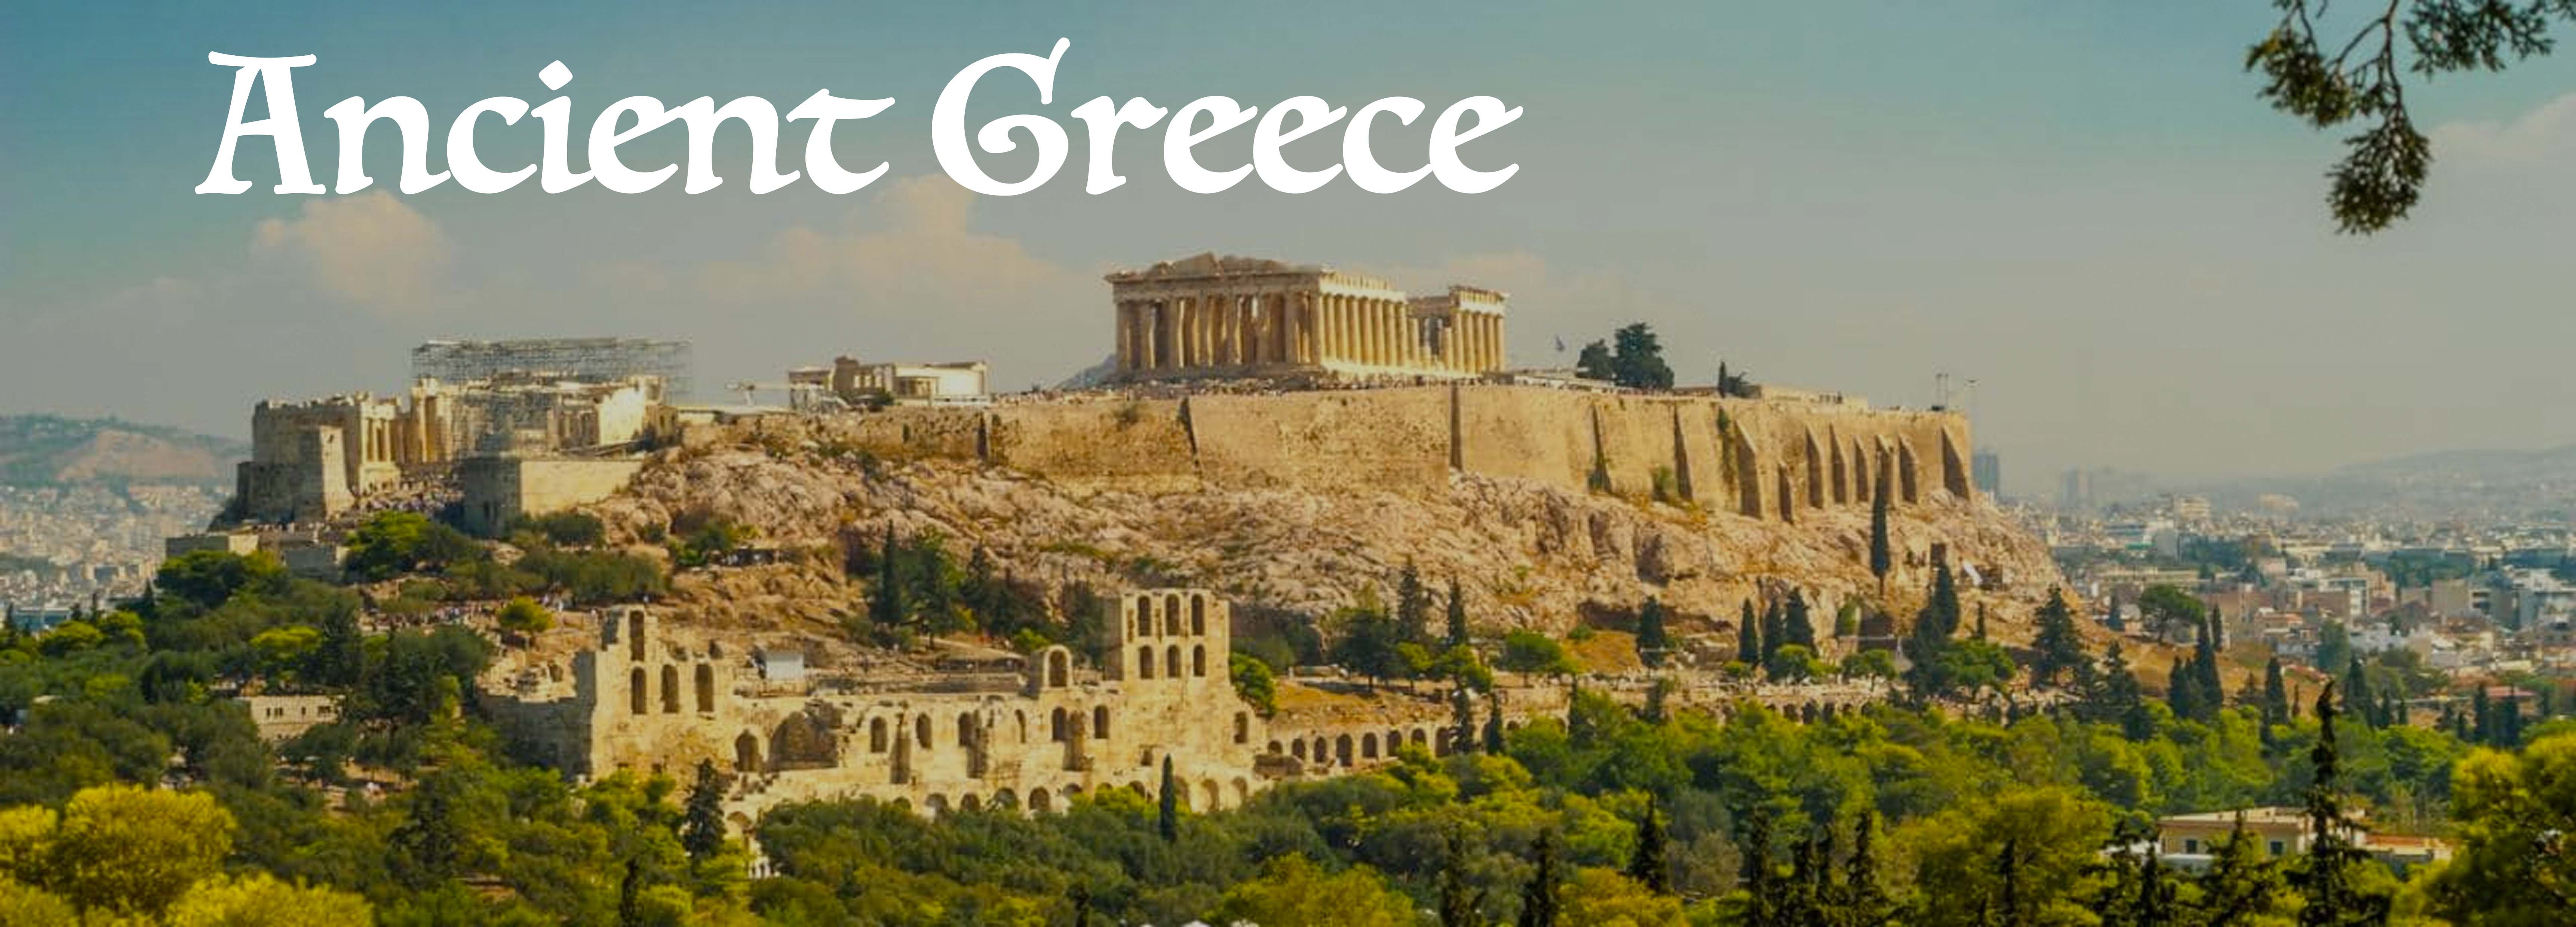 Ancient Greece - Dan Tastic Education
